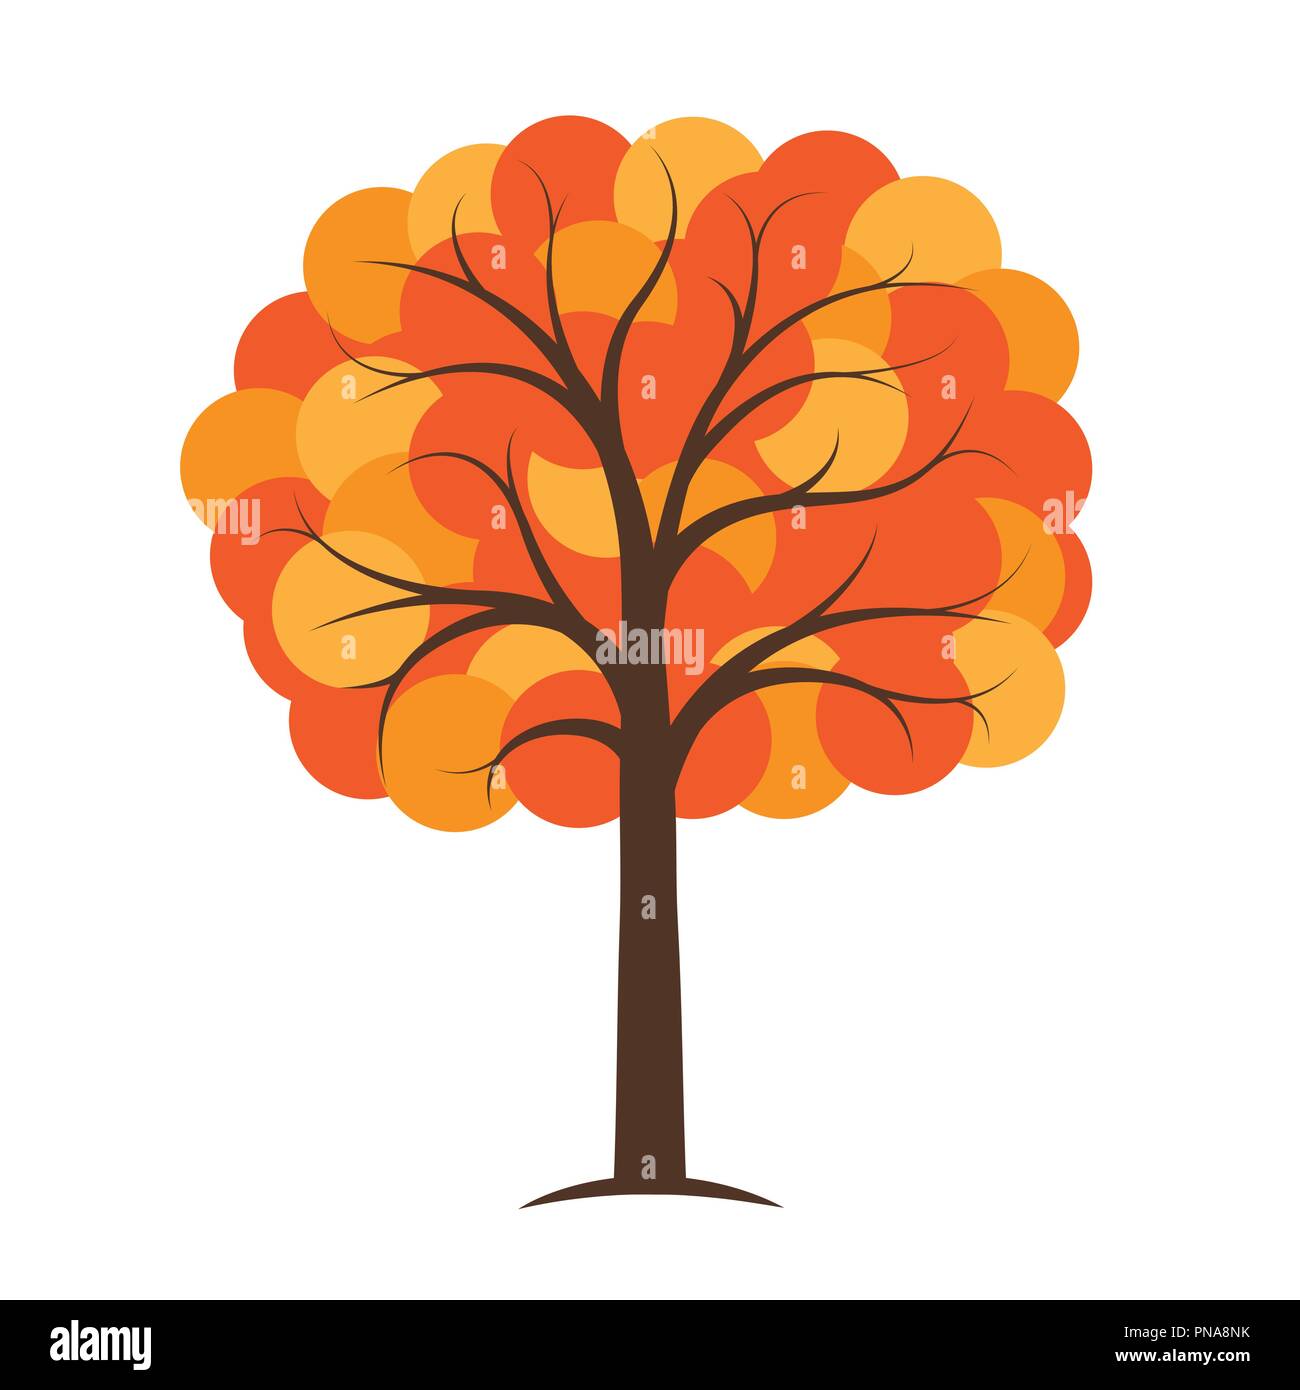 orange and yellow autumn tree vector illustration EPS10 Stock Vector